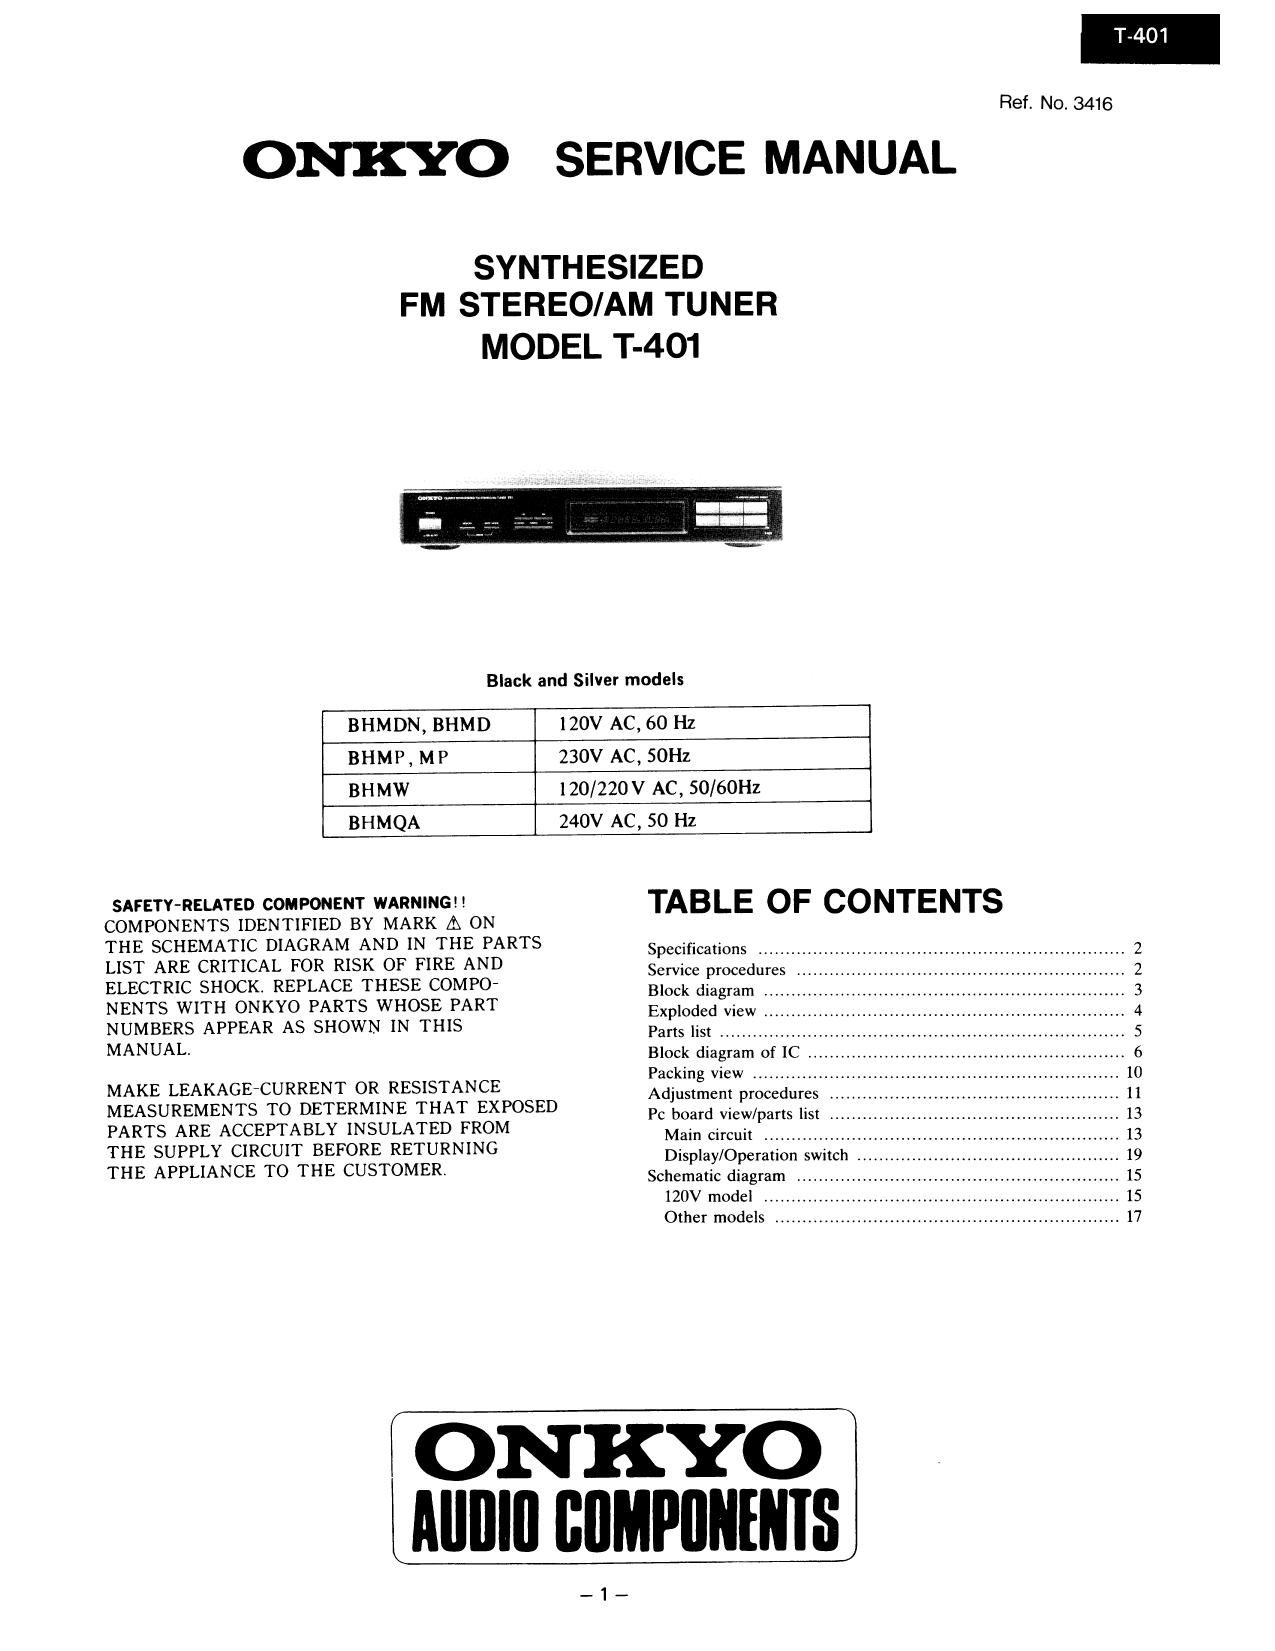 Onkyo T 401 Service Manual